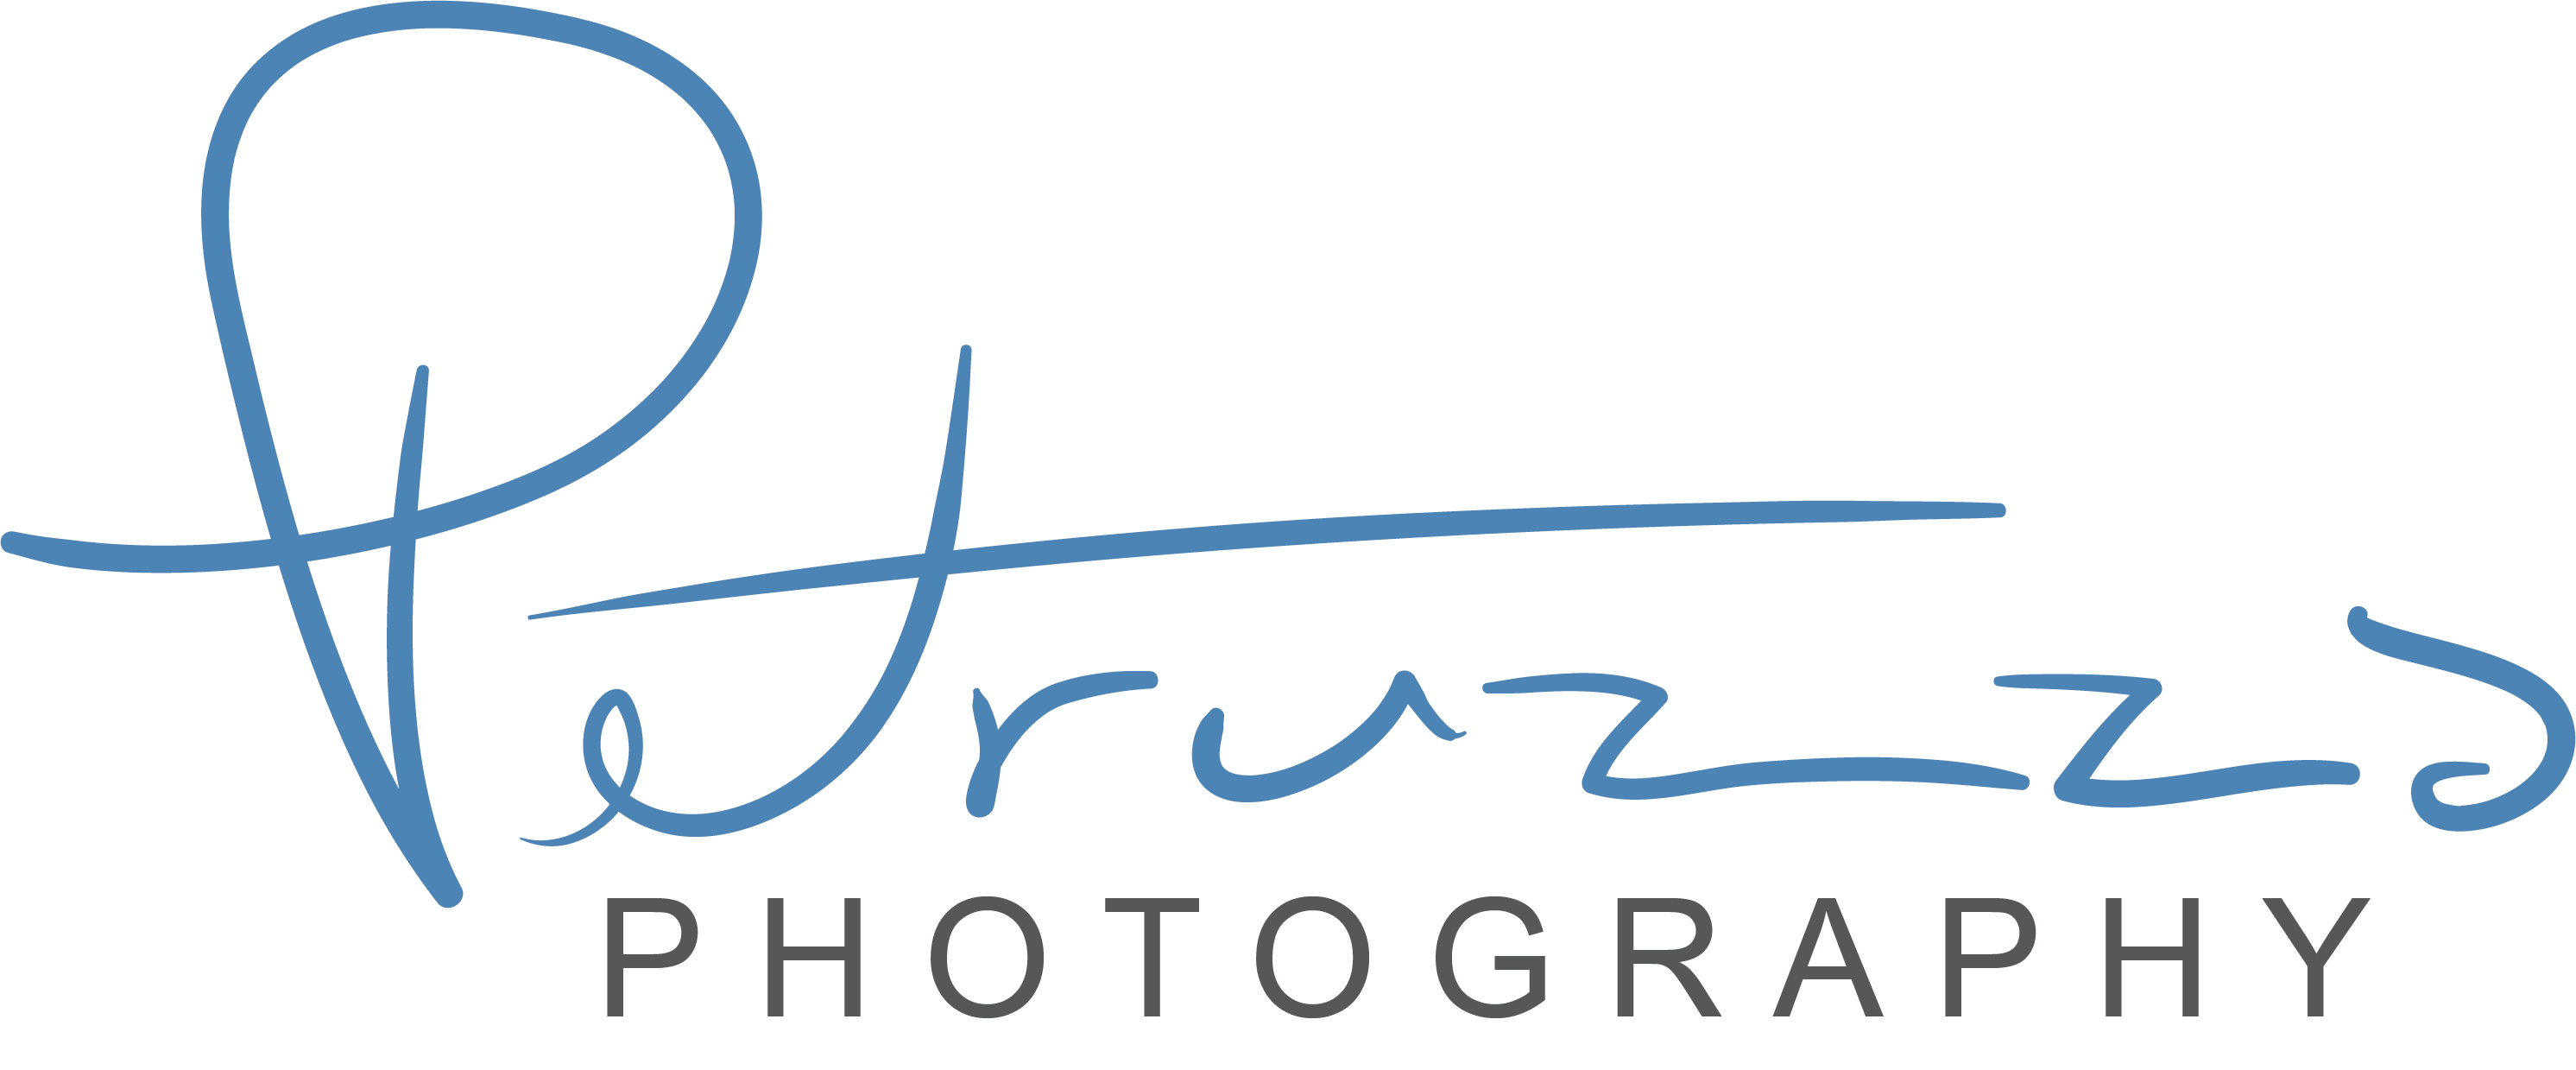 Petruzzo photography logo